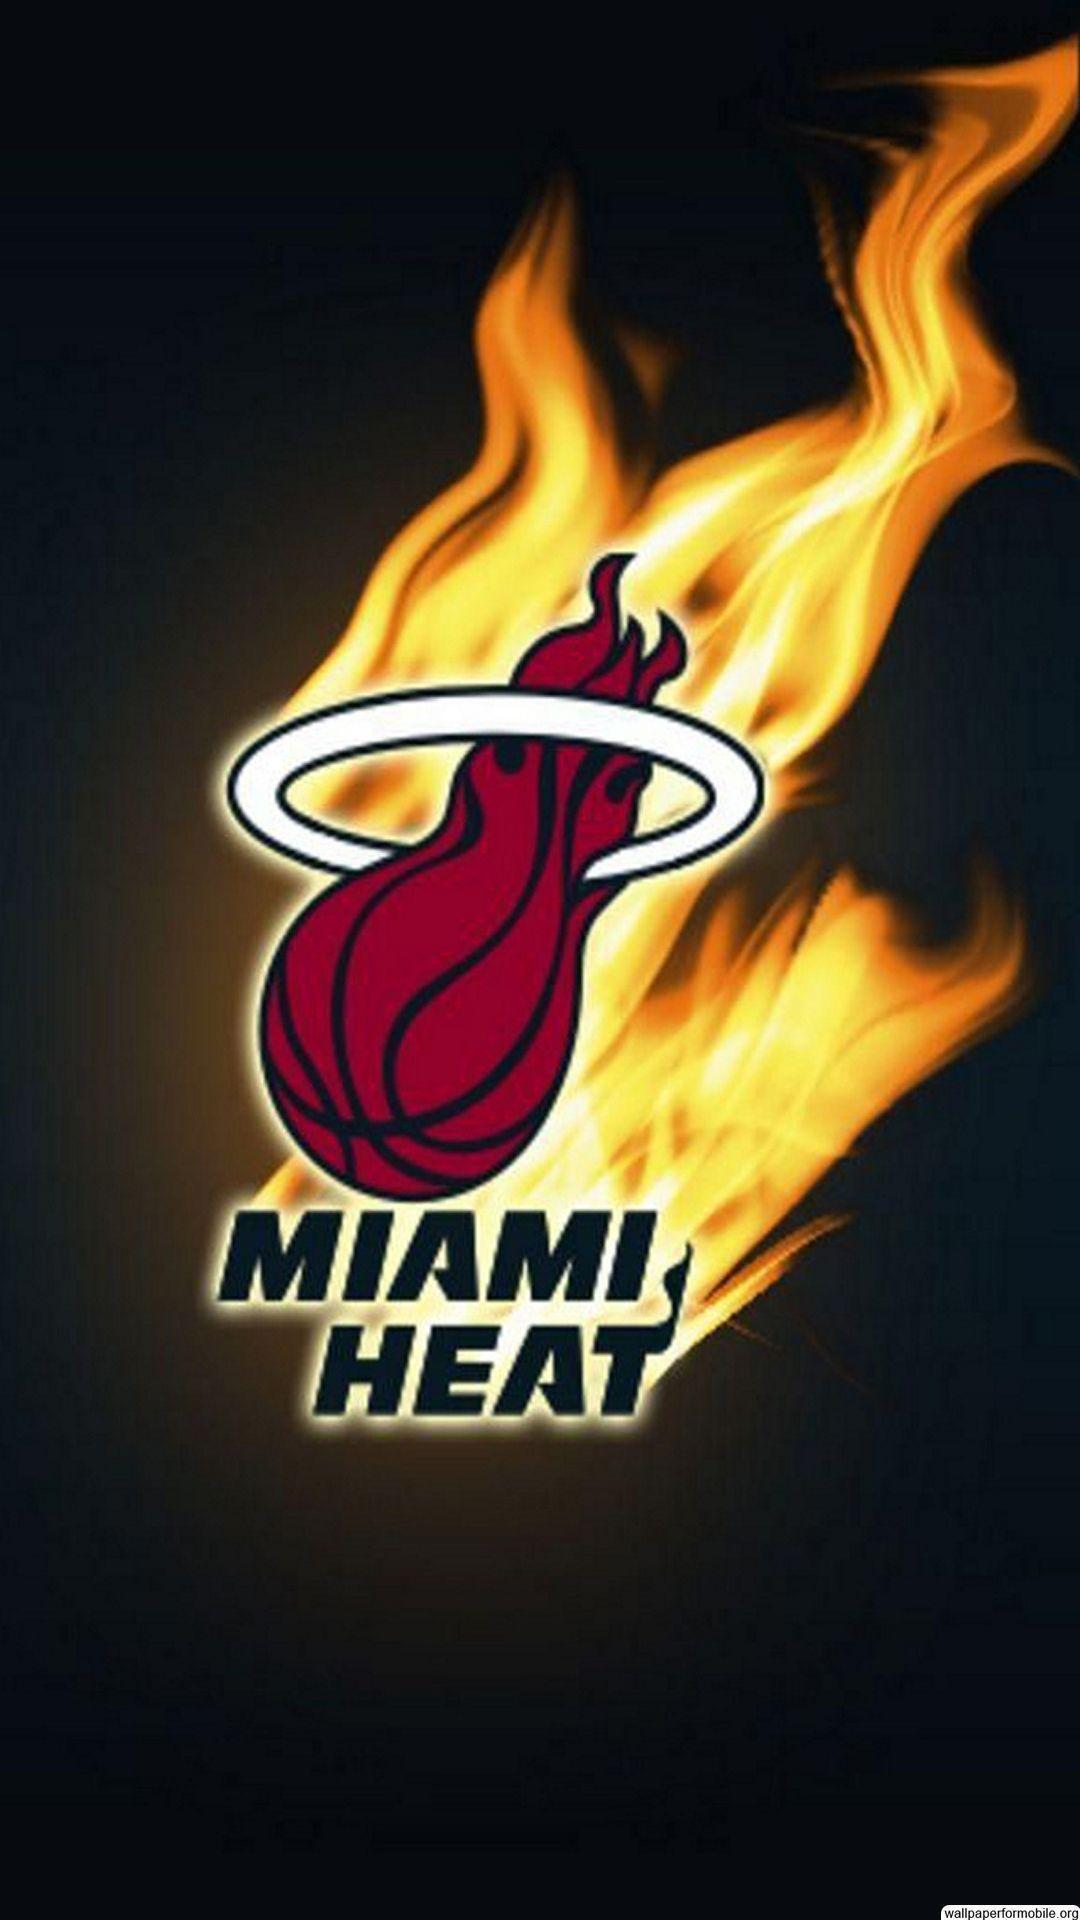 Miami Heat Wallpaper Free Download for Mobile